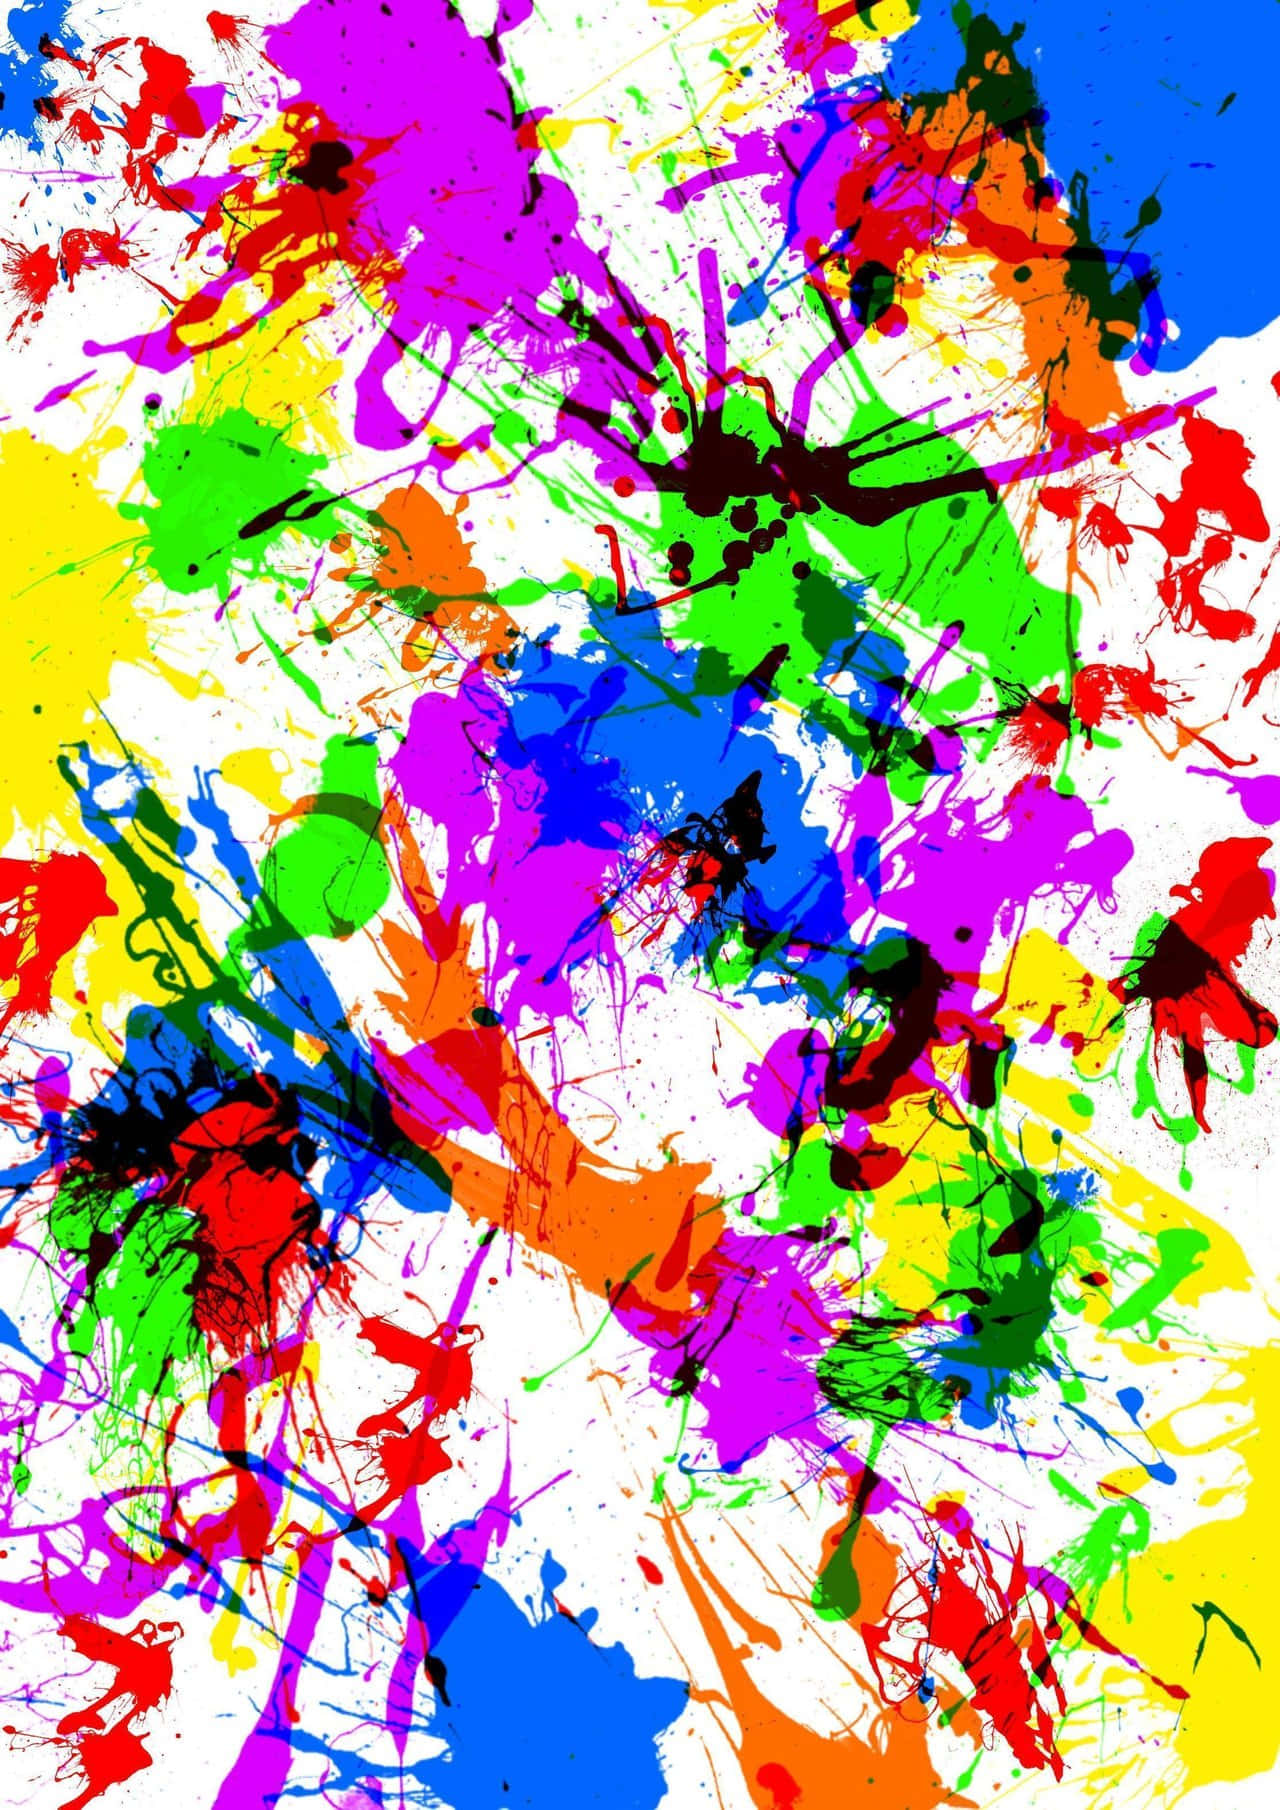 100 Paint Splatter Backgrounds